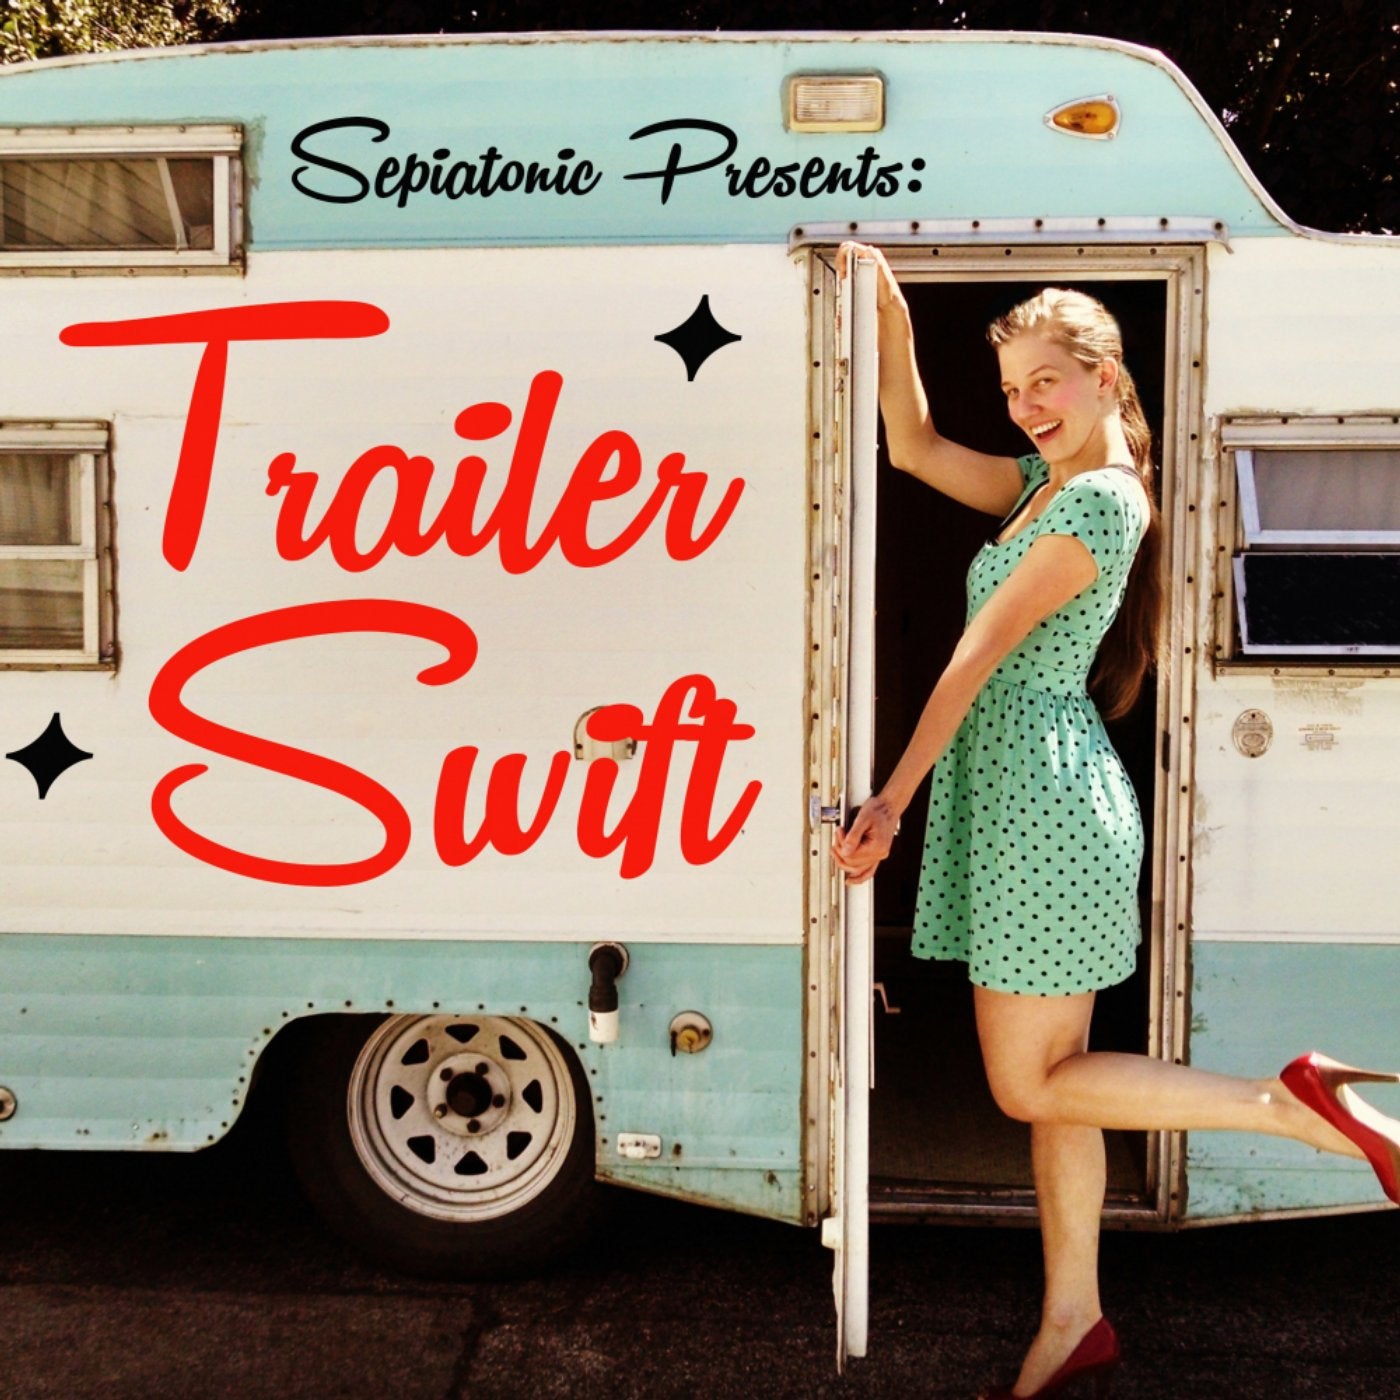 Trailer Swift